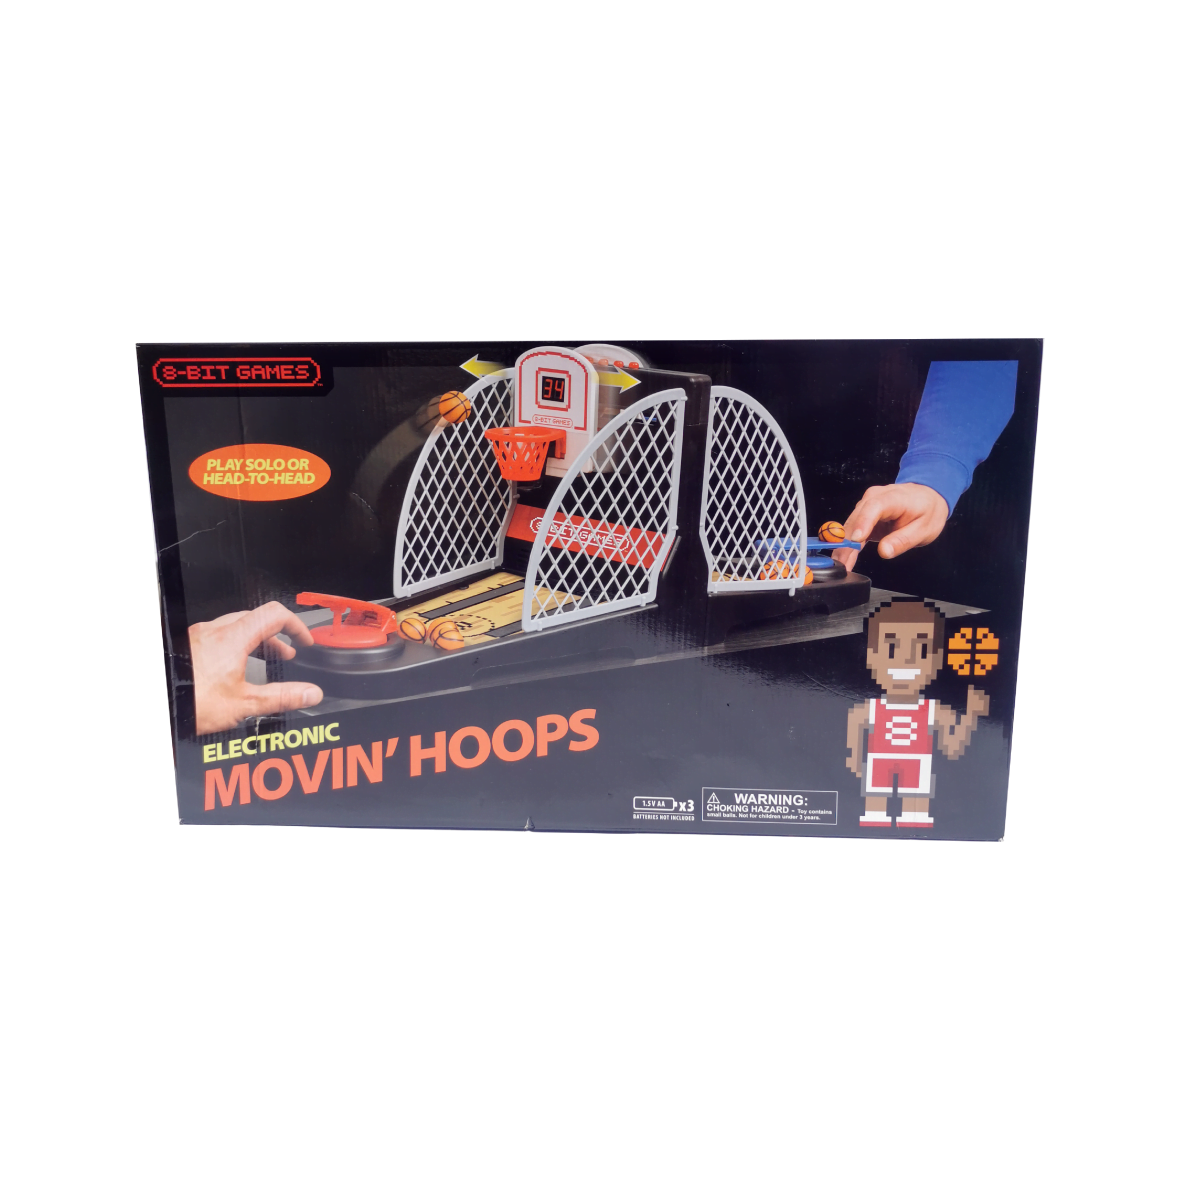 Juego de Baloncesto Electronic Movin’ Hoops